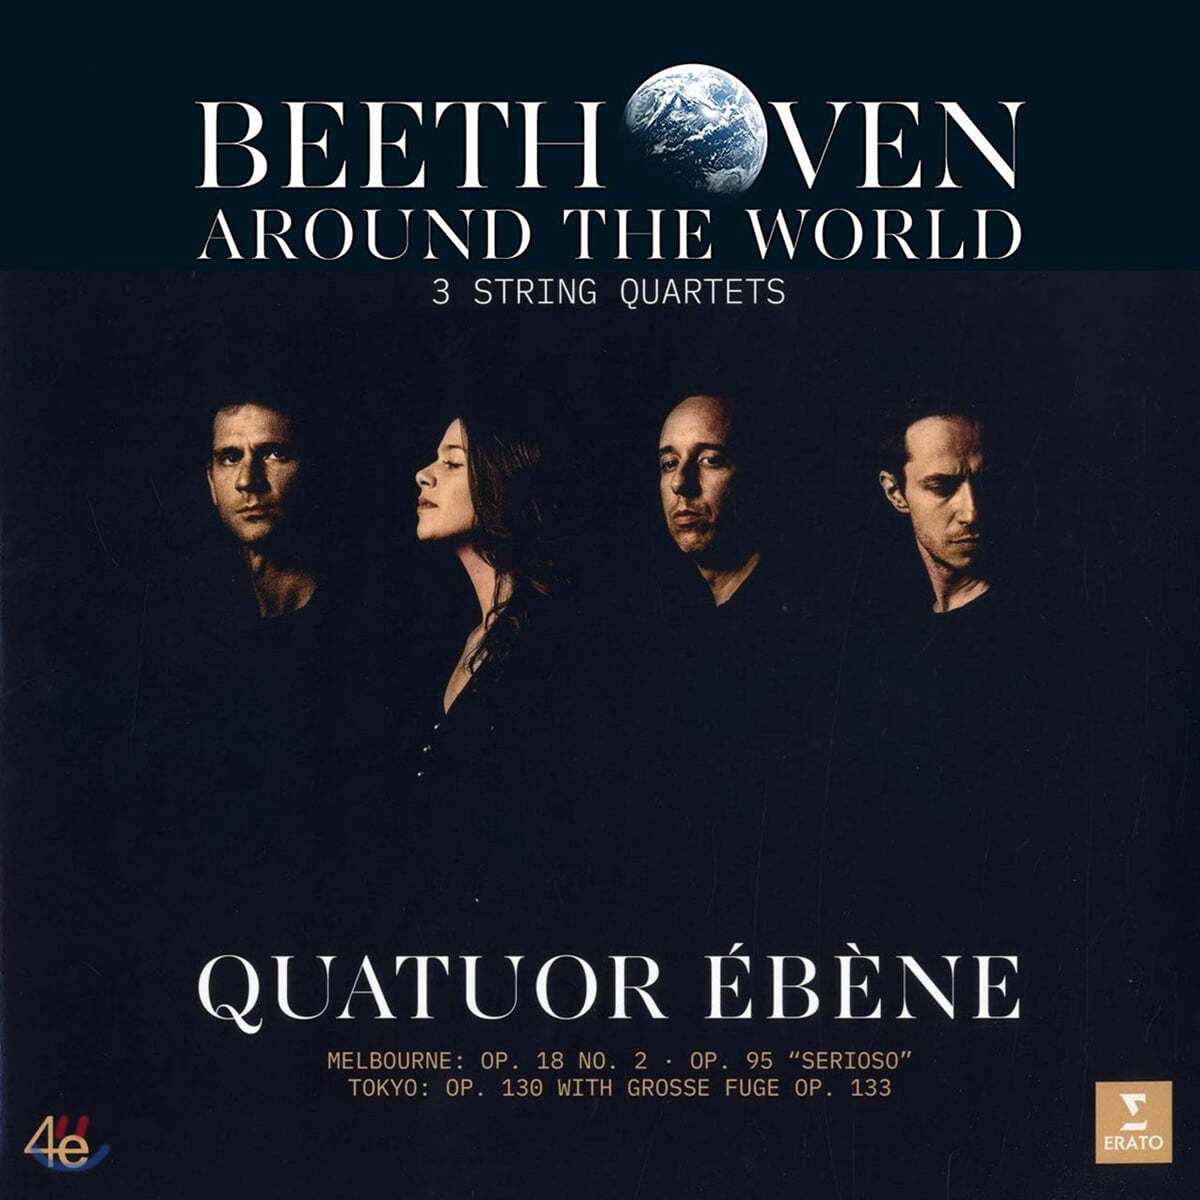 Quatuor Ebene 베토벤: 3개의 현악 사중주 (Beethoven Around the World) [2LP] 